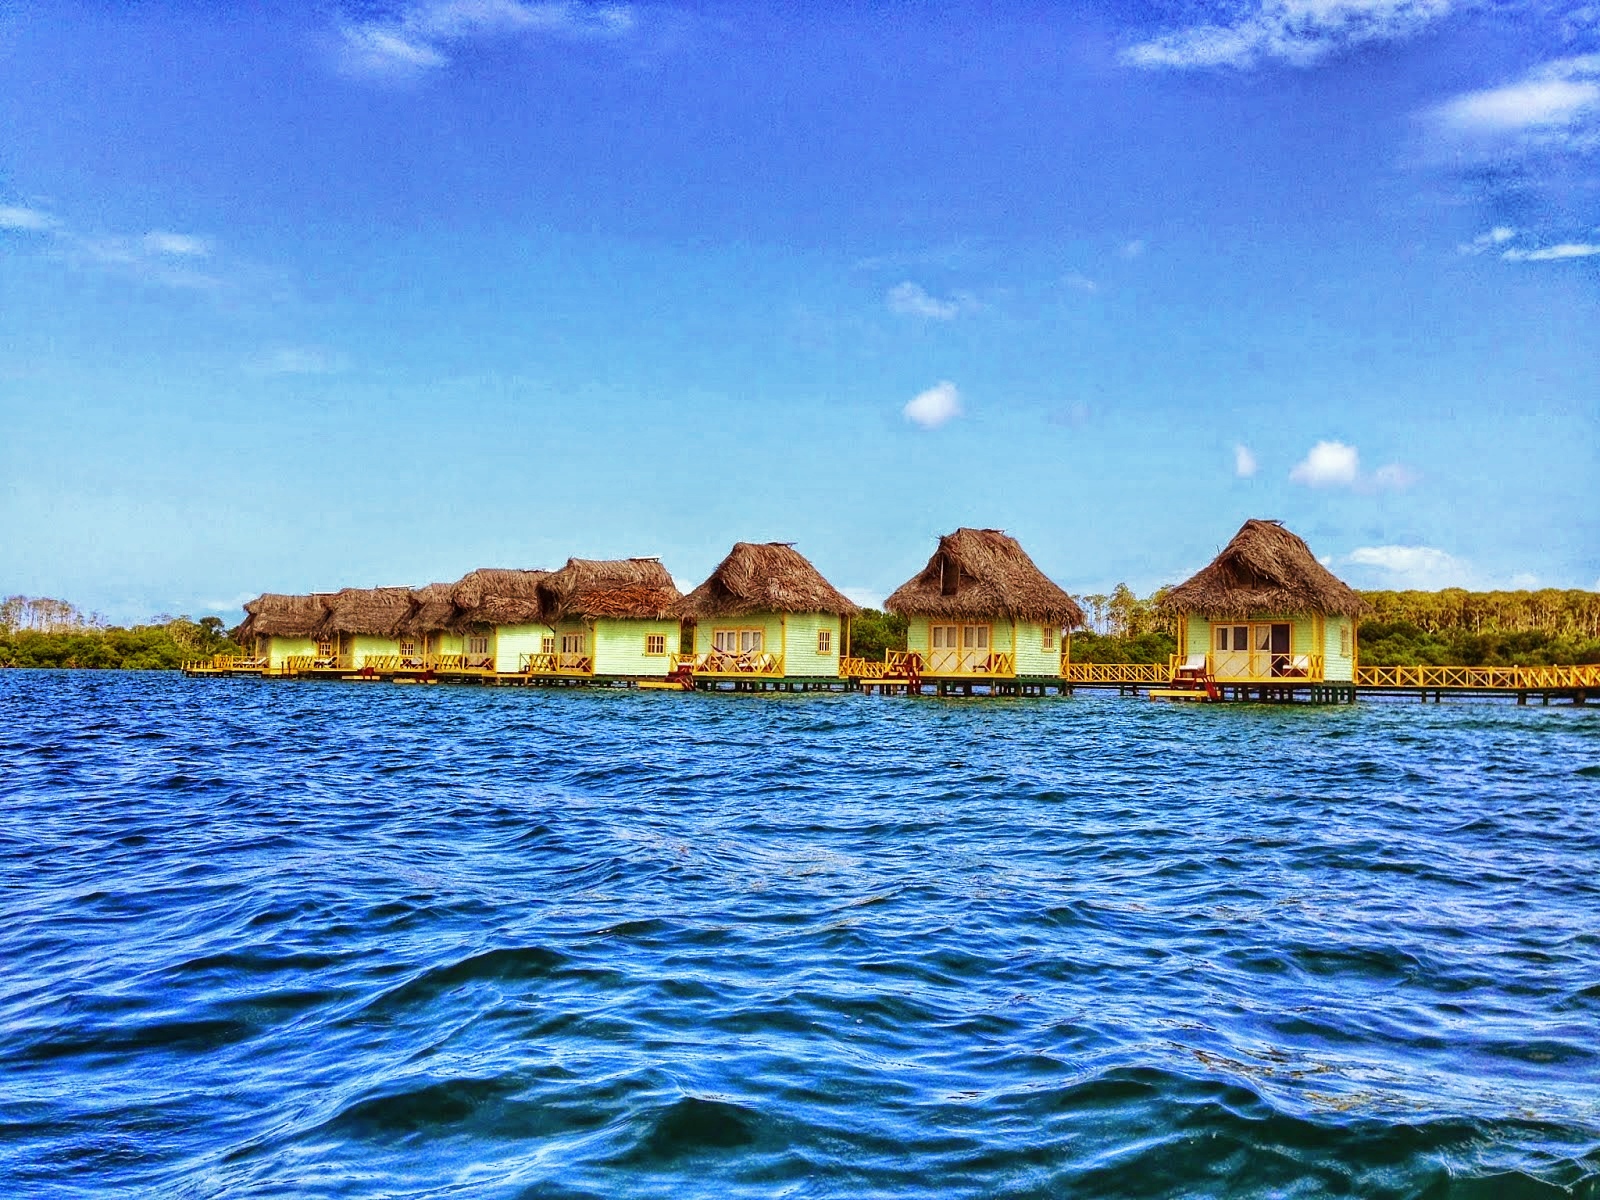 Hotel Punta Caracol Acqua Lodge - Bocas del Toro - Panamá